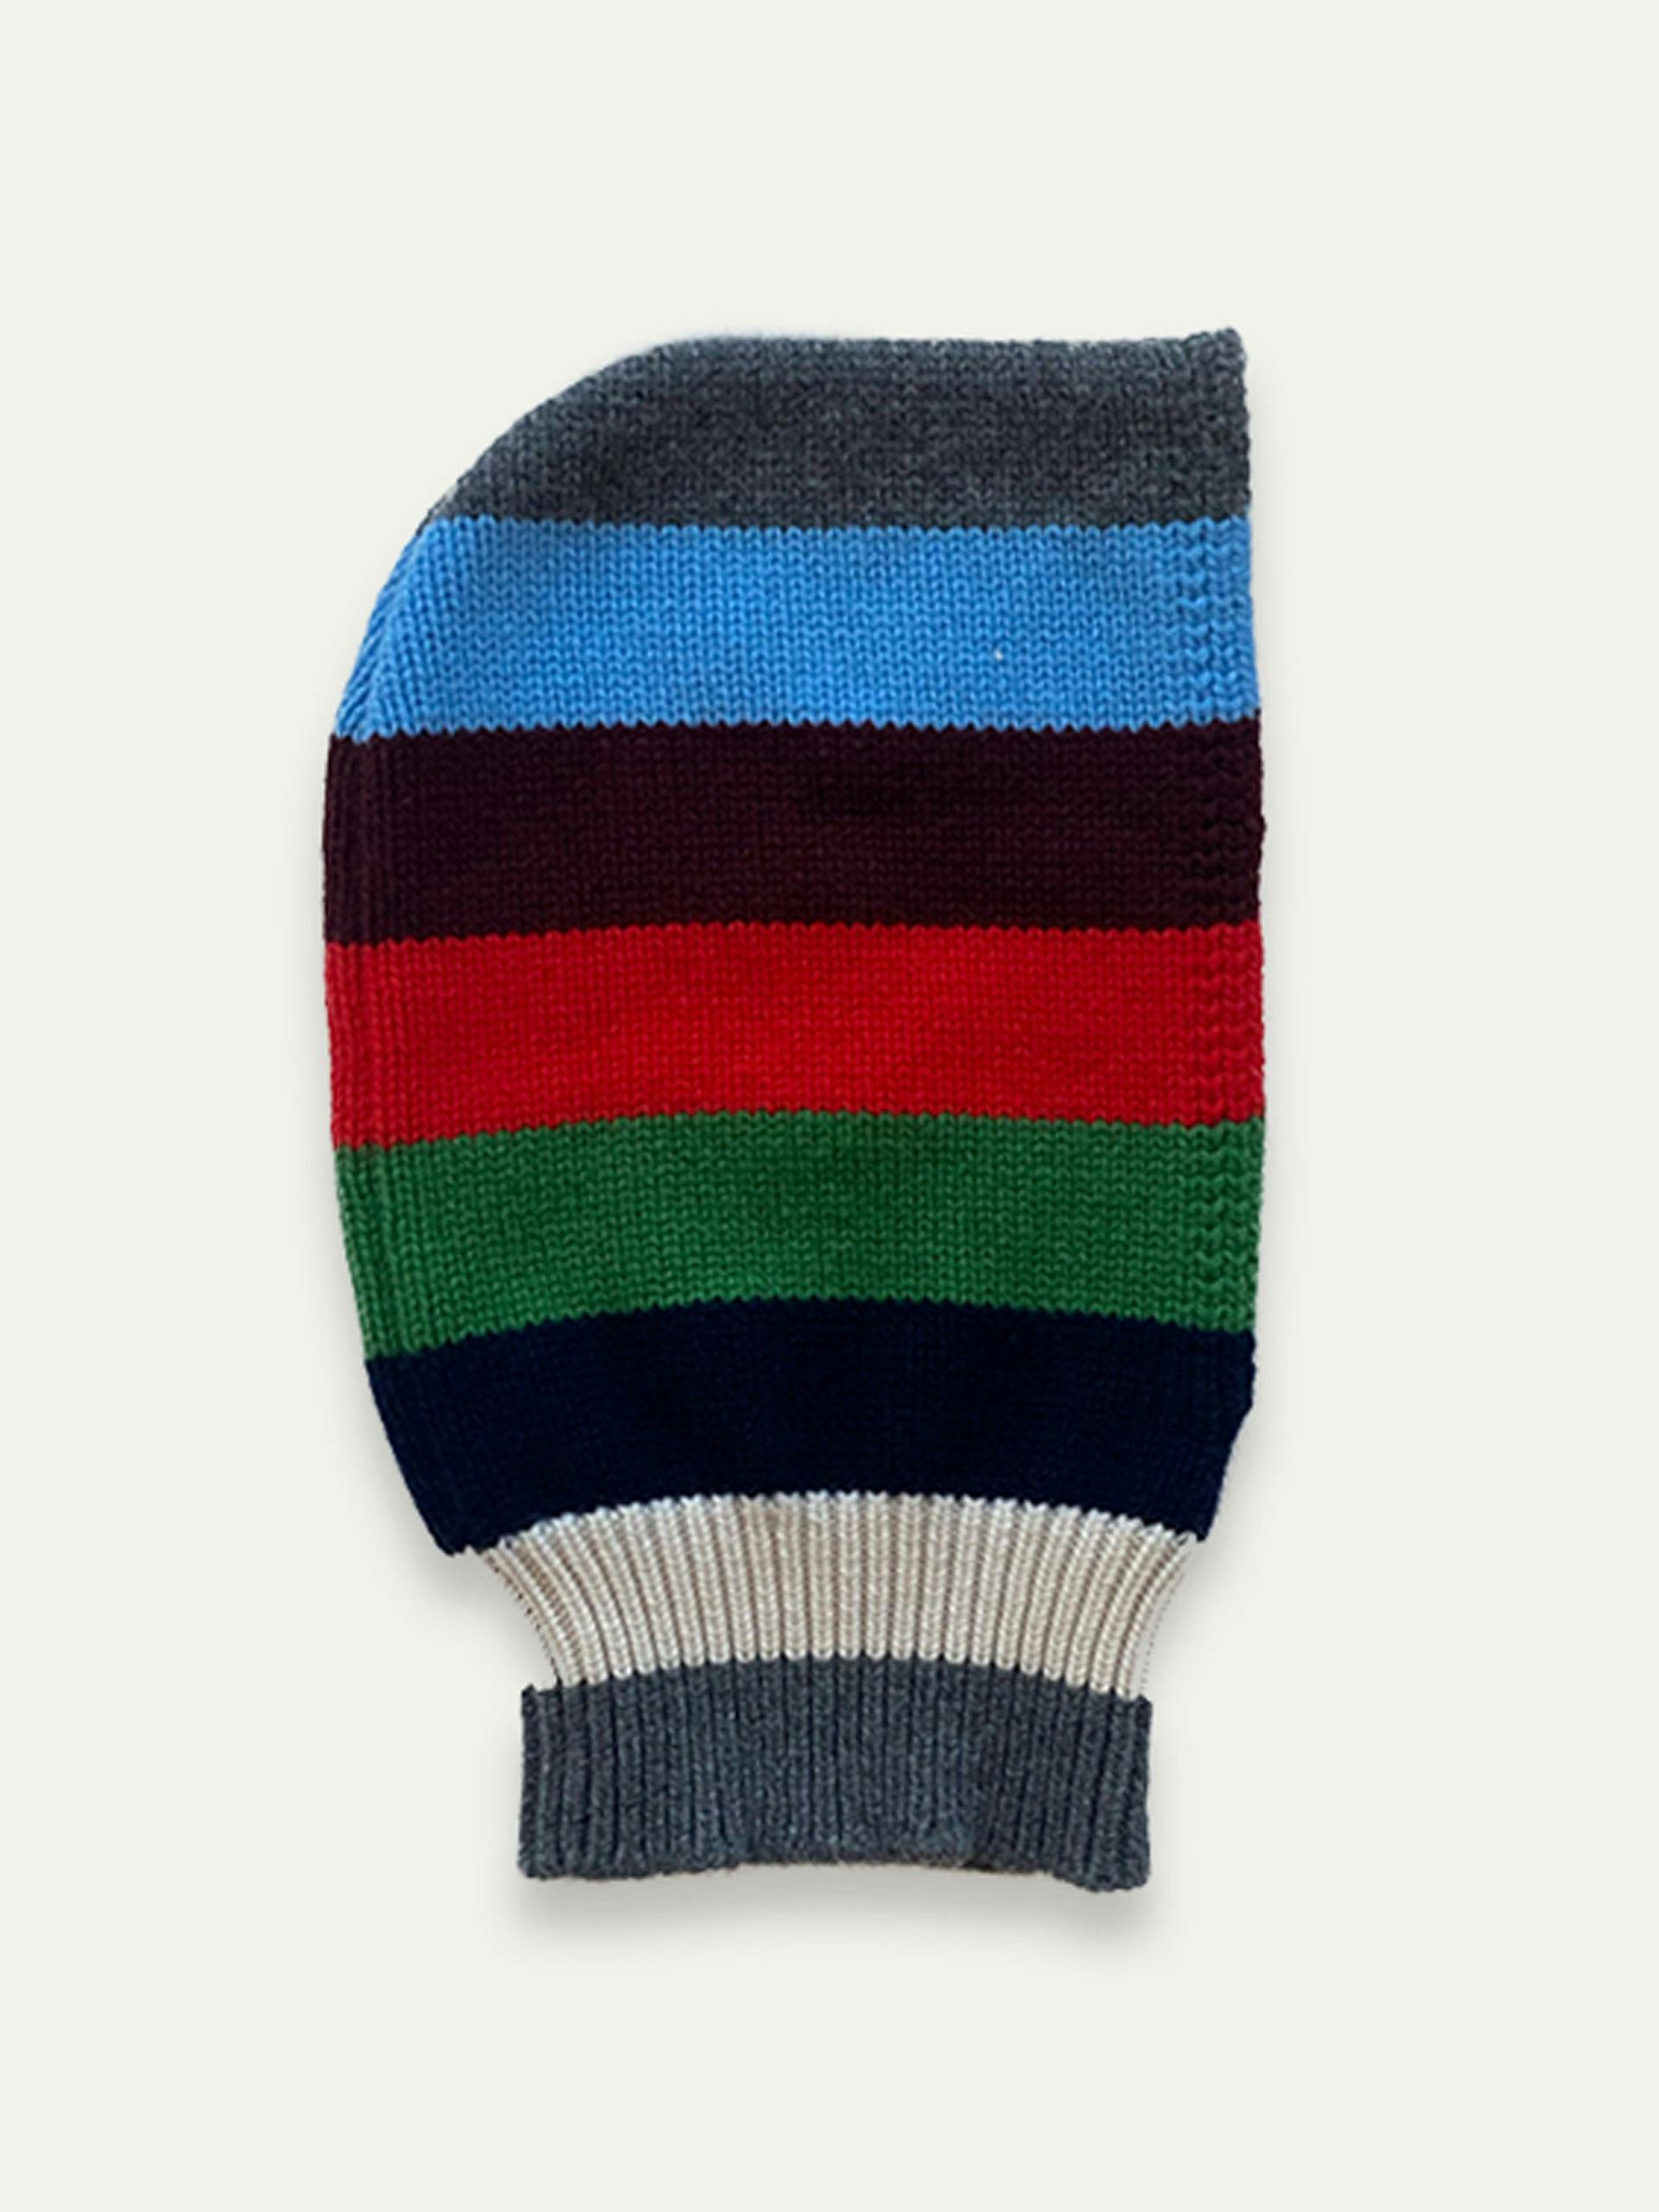 Hand knitted Geelong hood in multi-stripe